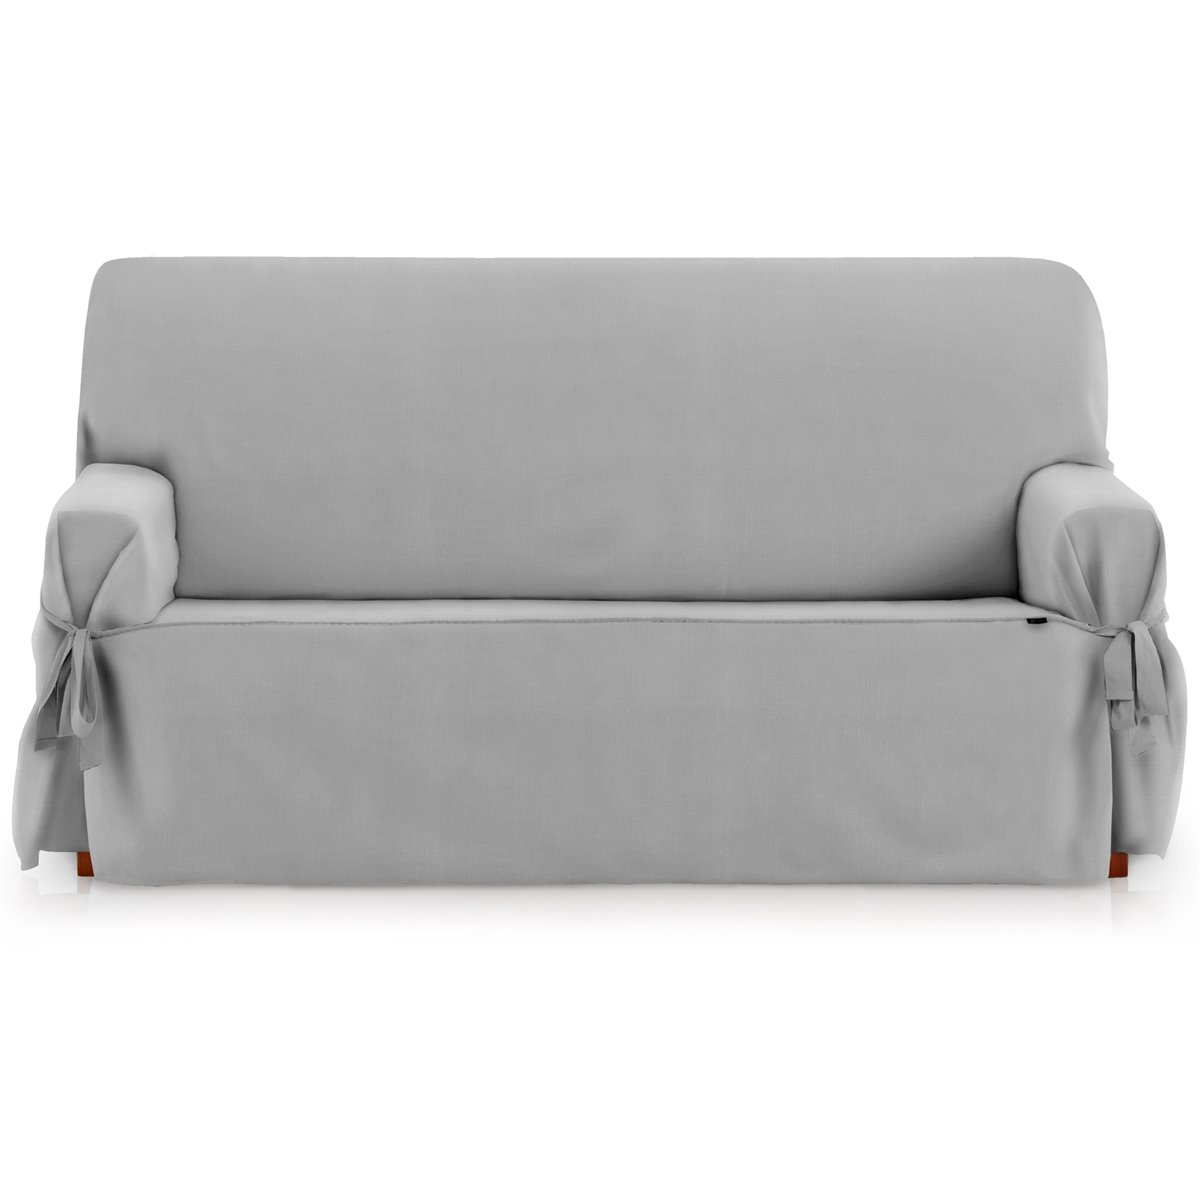 Funda de sofá elastica antimanchas pratico color liso gris